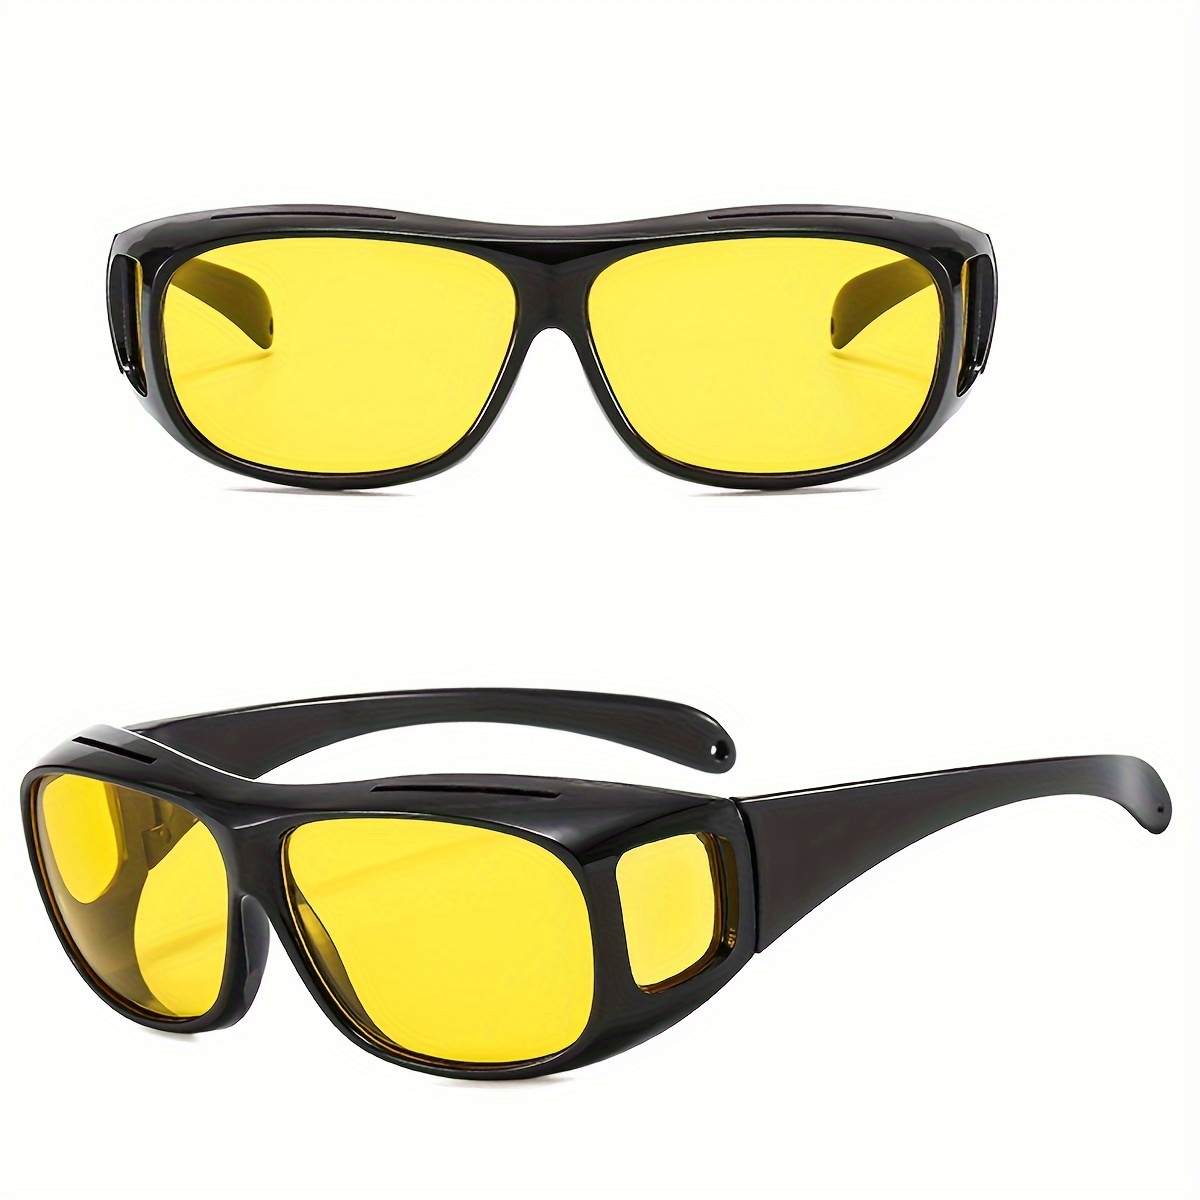 Snap Goggles Creative Glasses Sunglasses Wristband Polarized